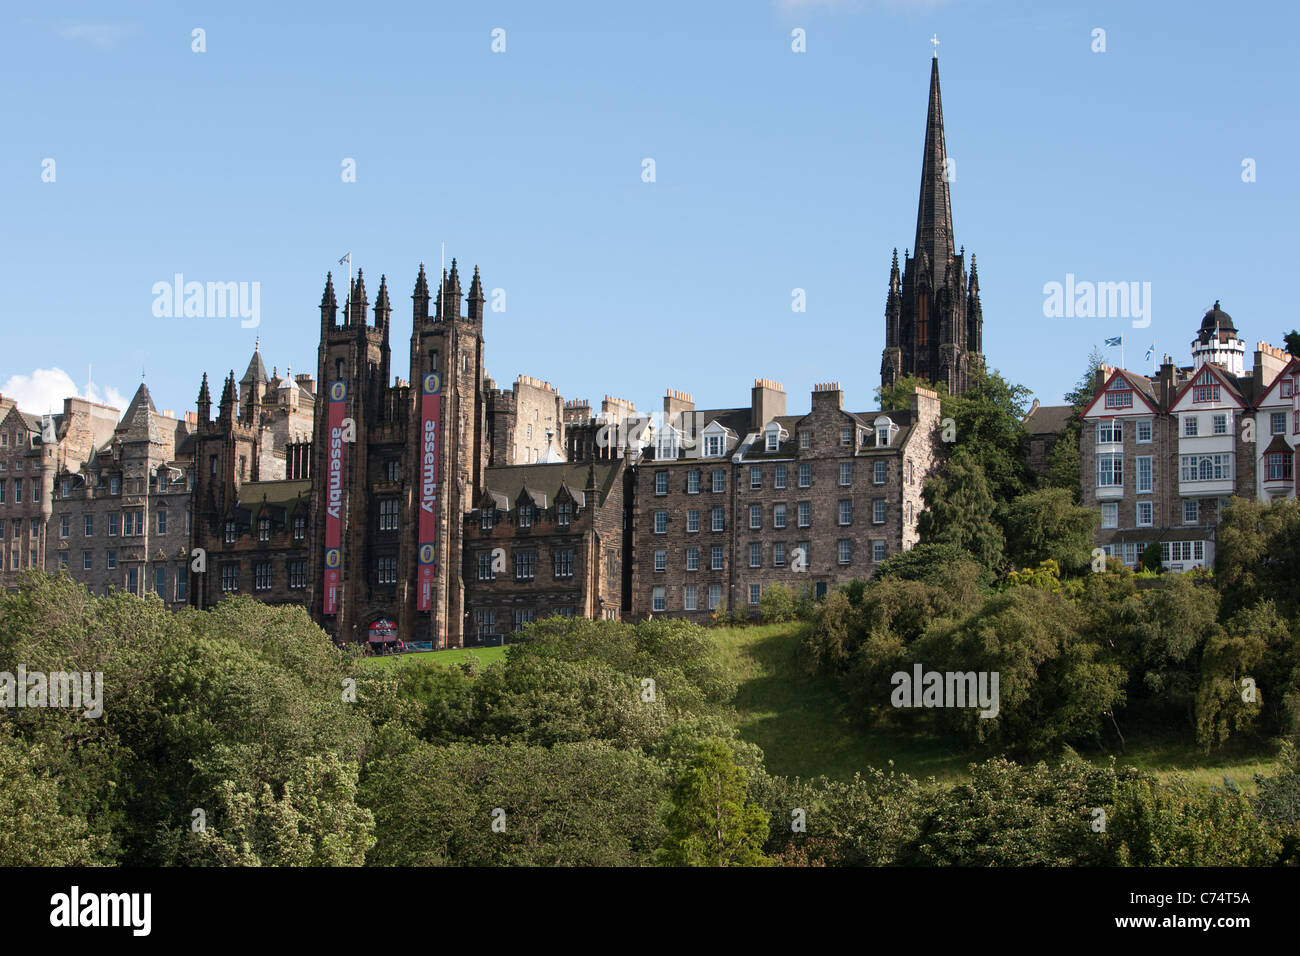 Looking across Princess Street Gardens towards the Royal Mile ( High Street), in Edinburgh, Scotland. Stock Photo